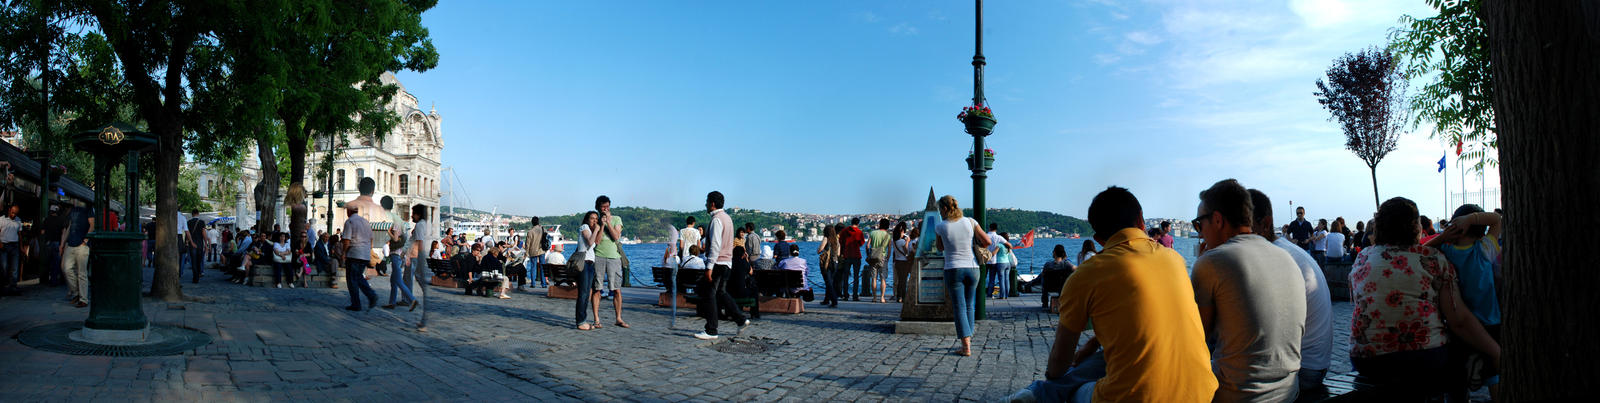 Ortakoy Square Panoramic 1